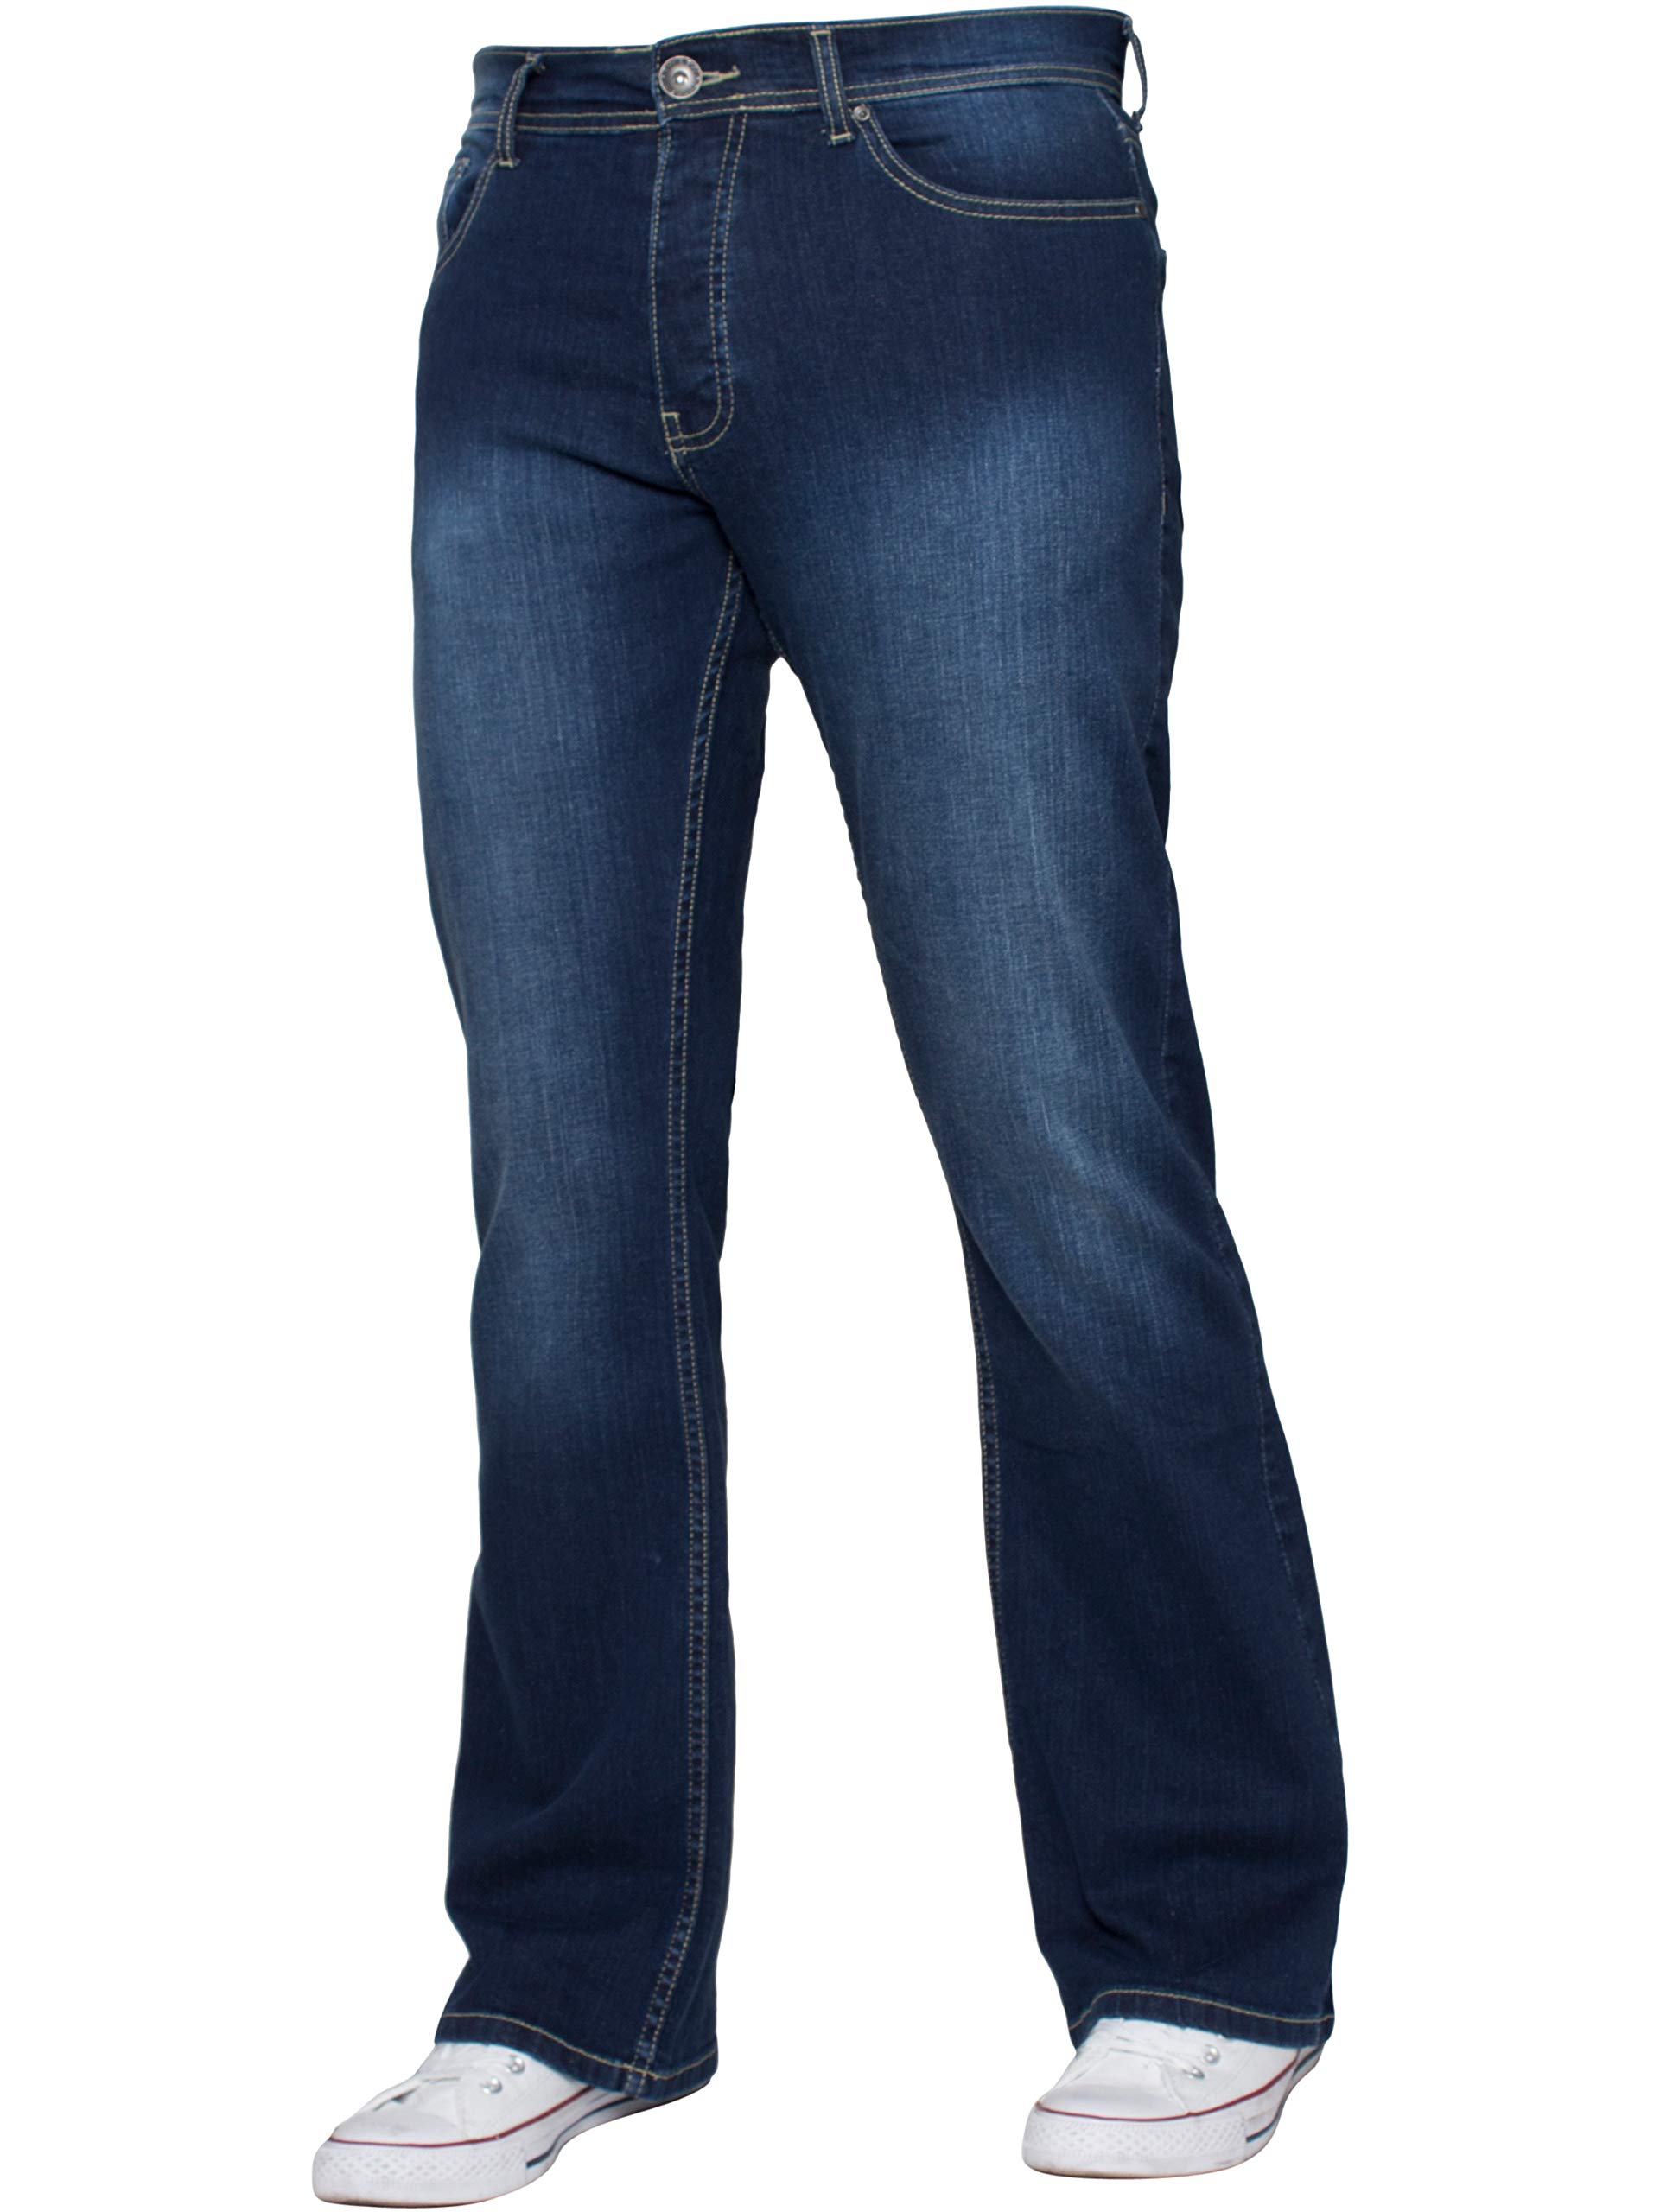 Enzo Herren Bootcut Jeans, Mid-Stonewash, 28 W/30 L